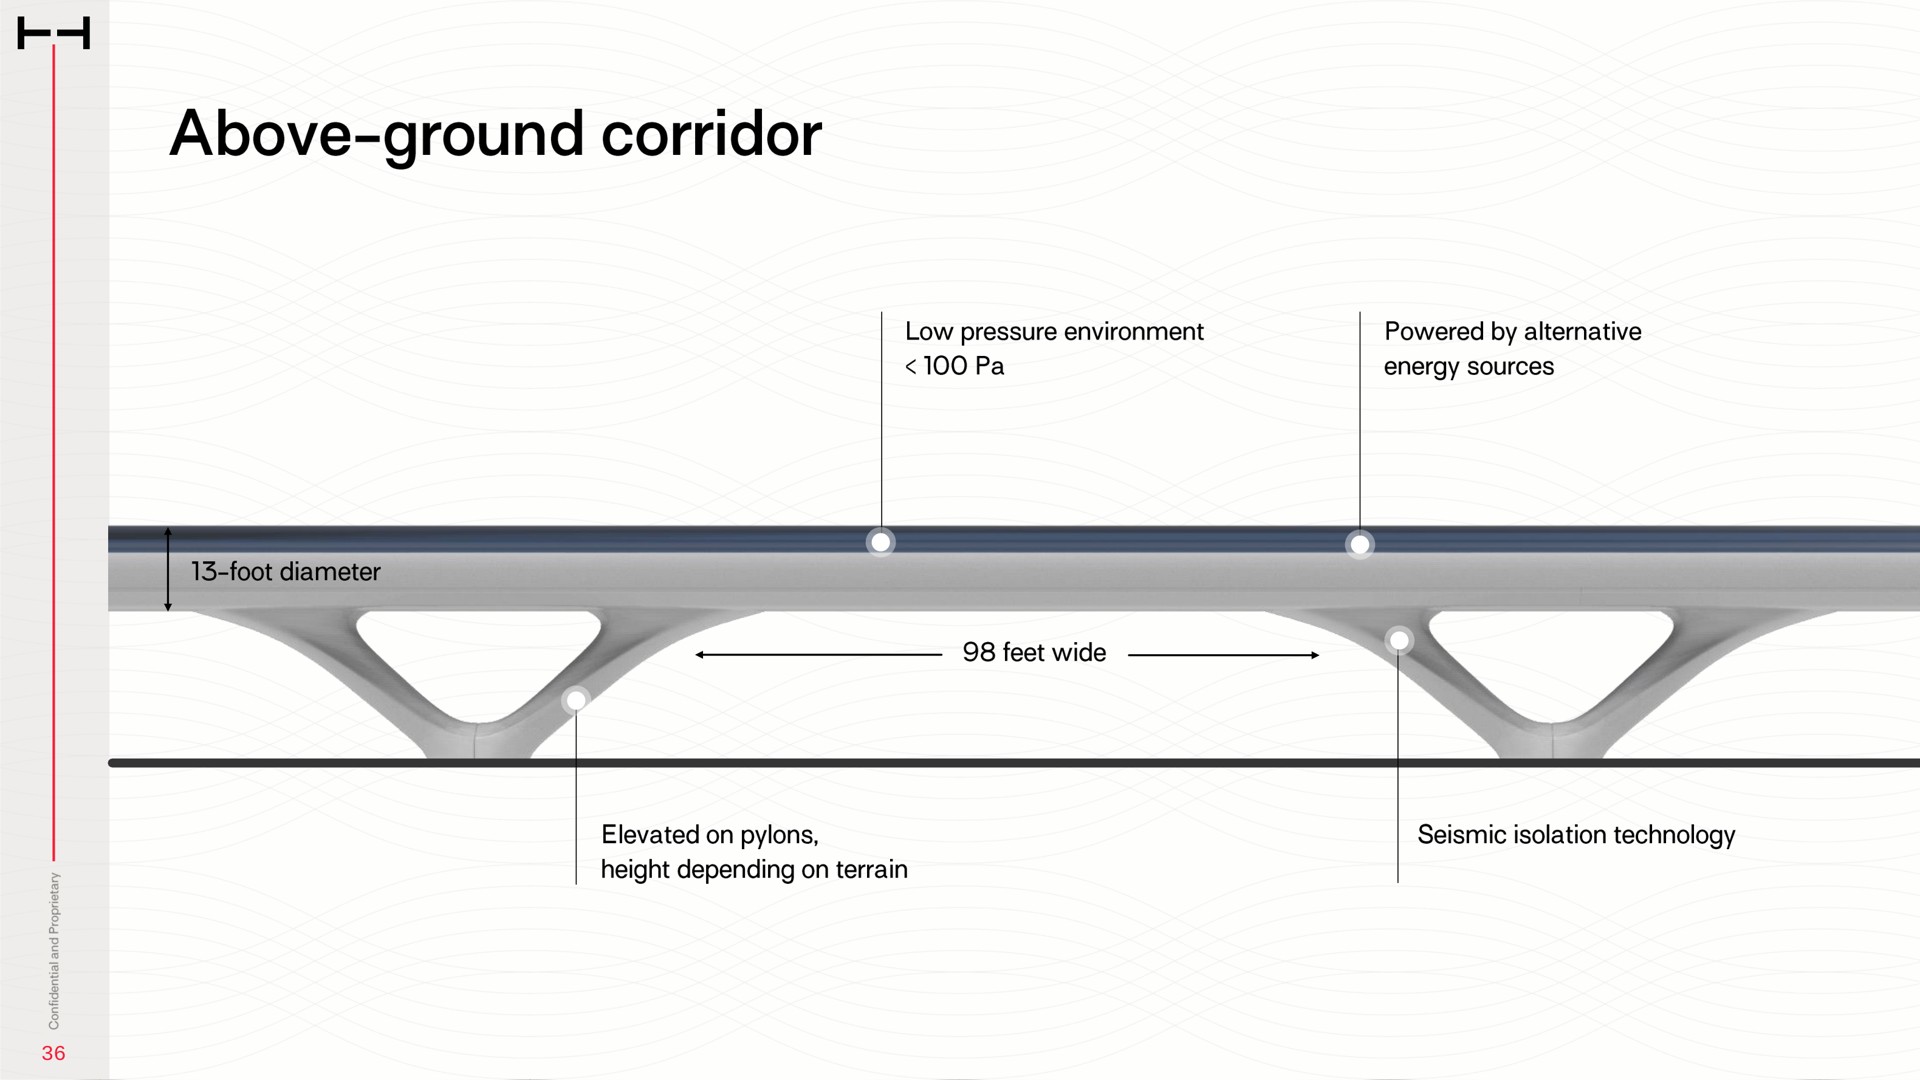 above ground corridor | HyperloopTT